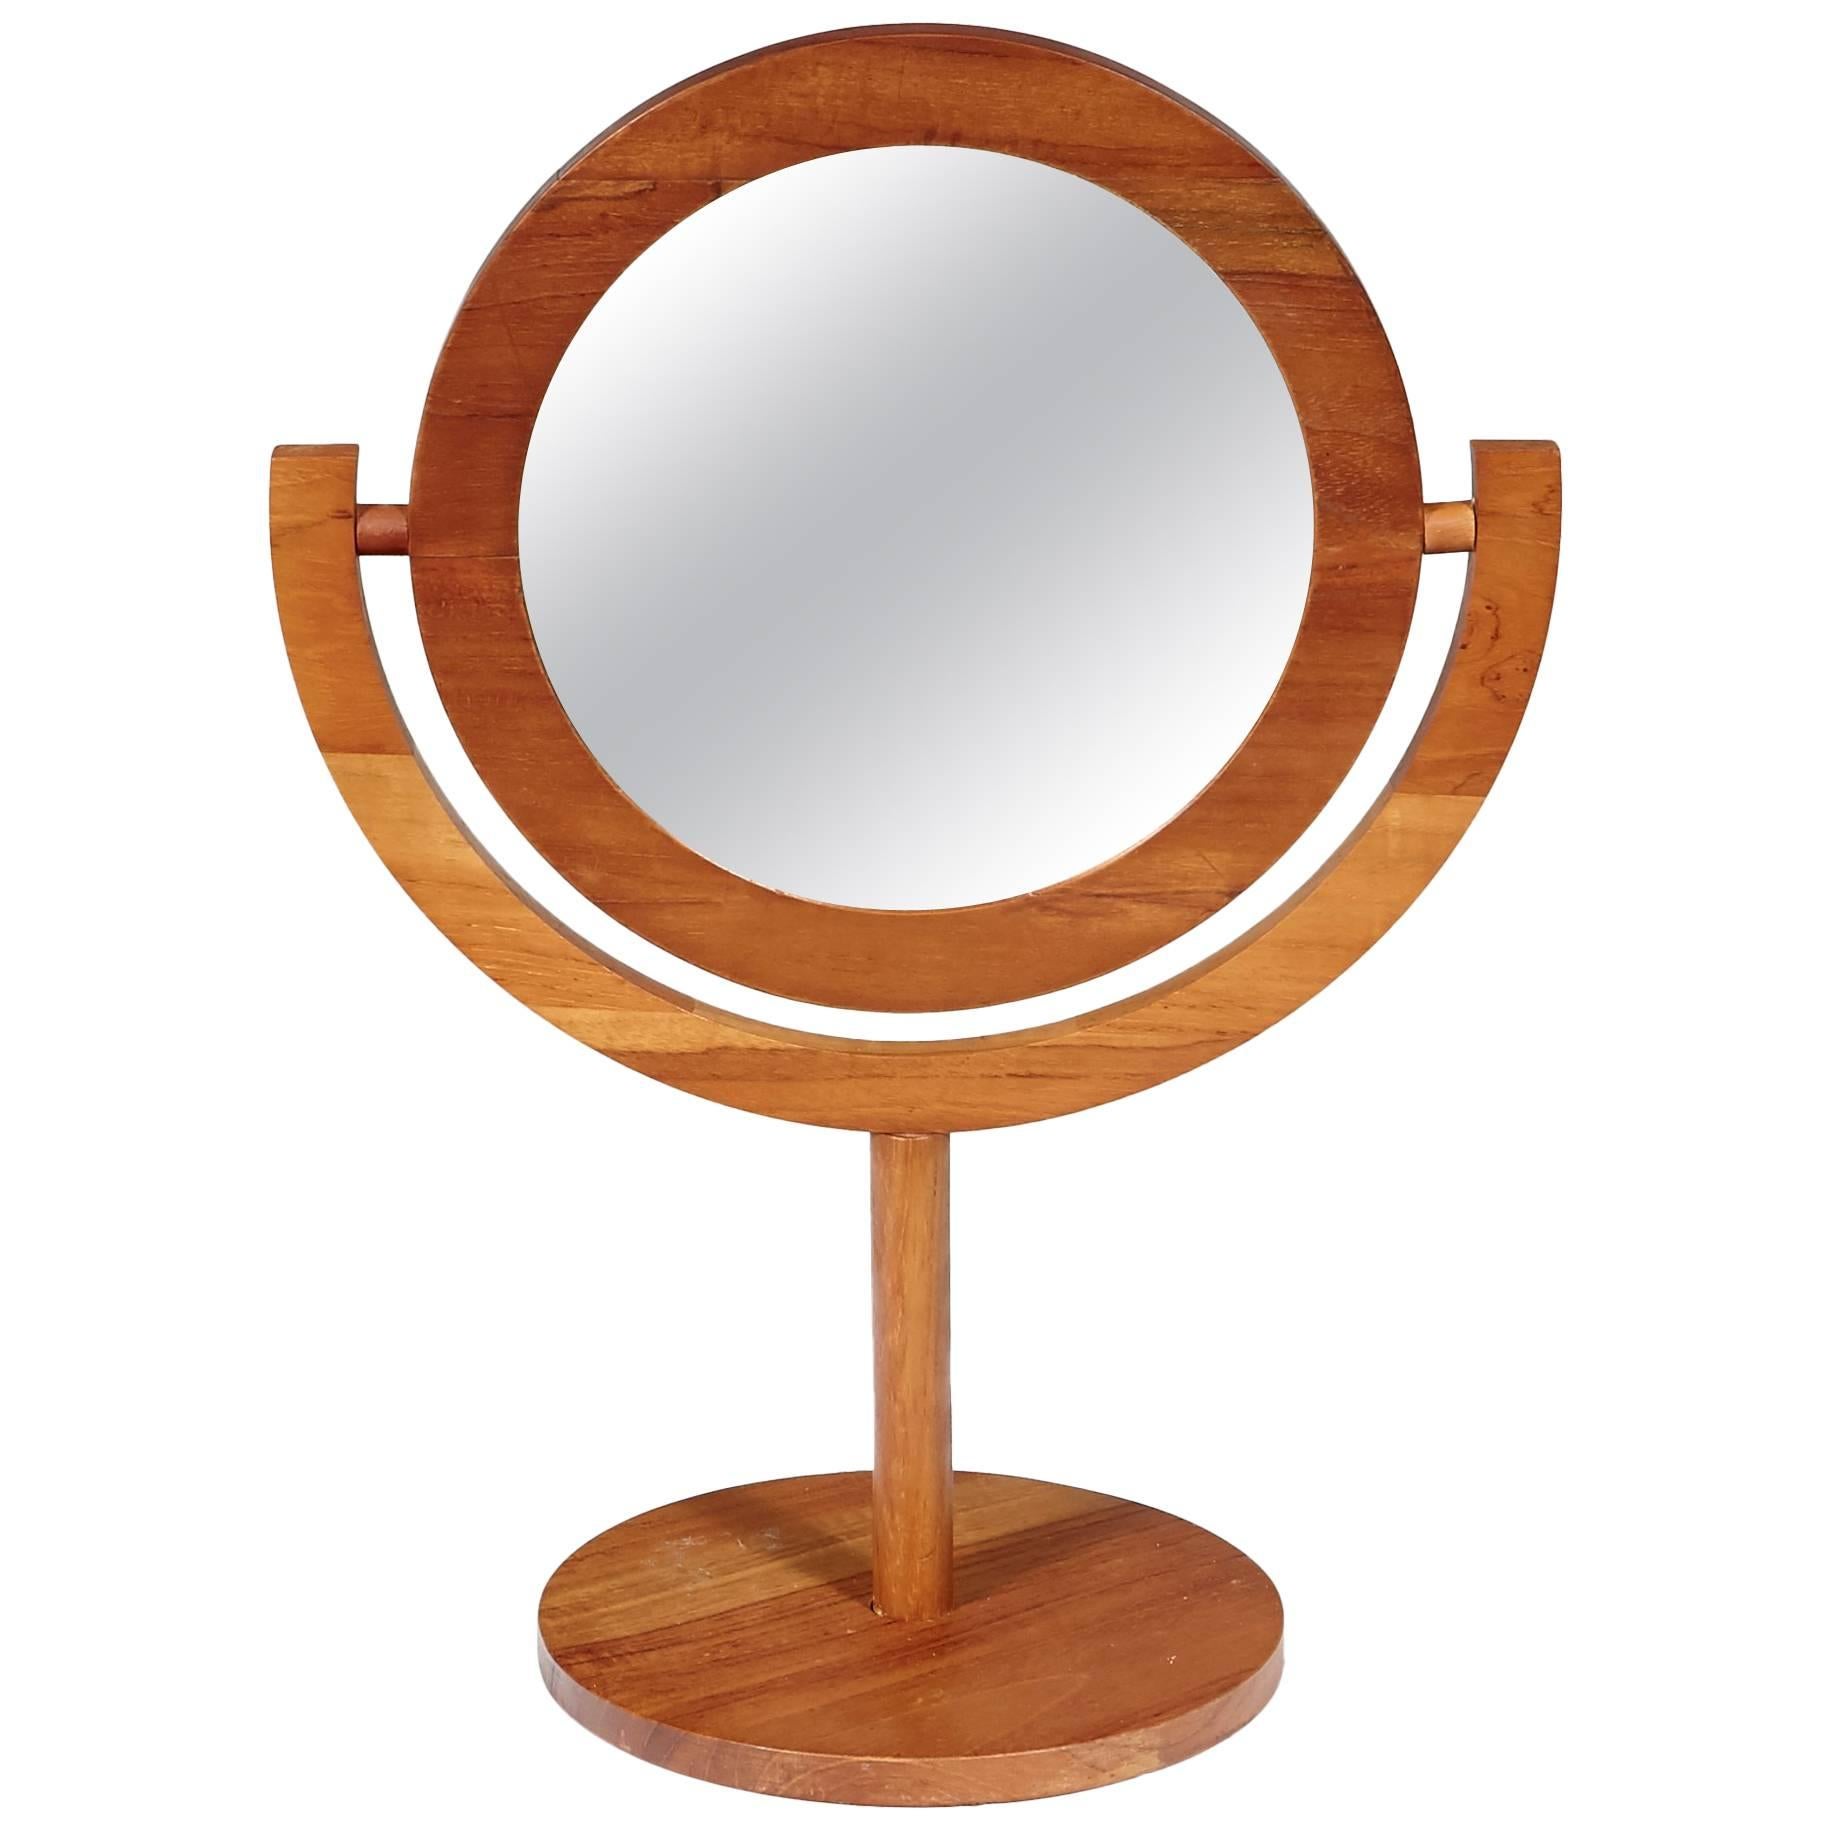 Scandinavian Modern Teak Tilting Vanity Mirror Attributed to Pedersen & Hansen